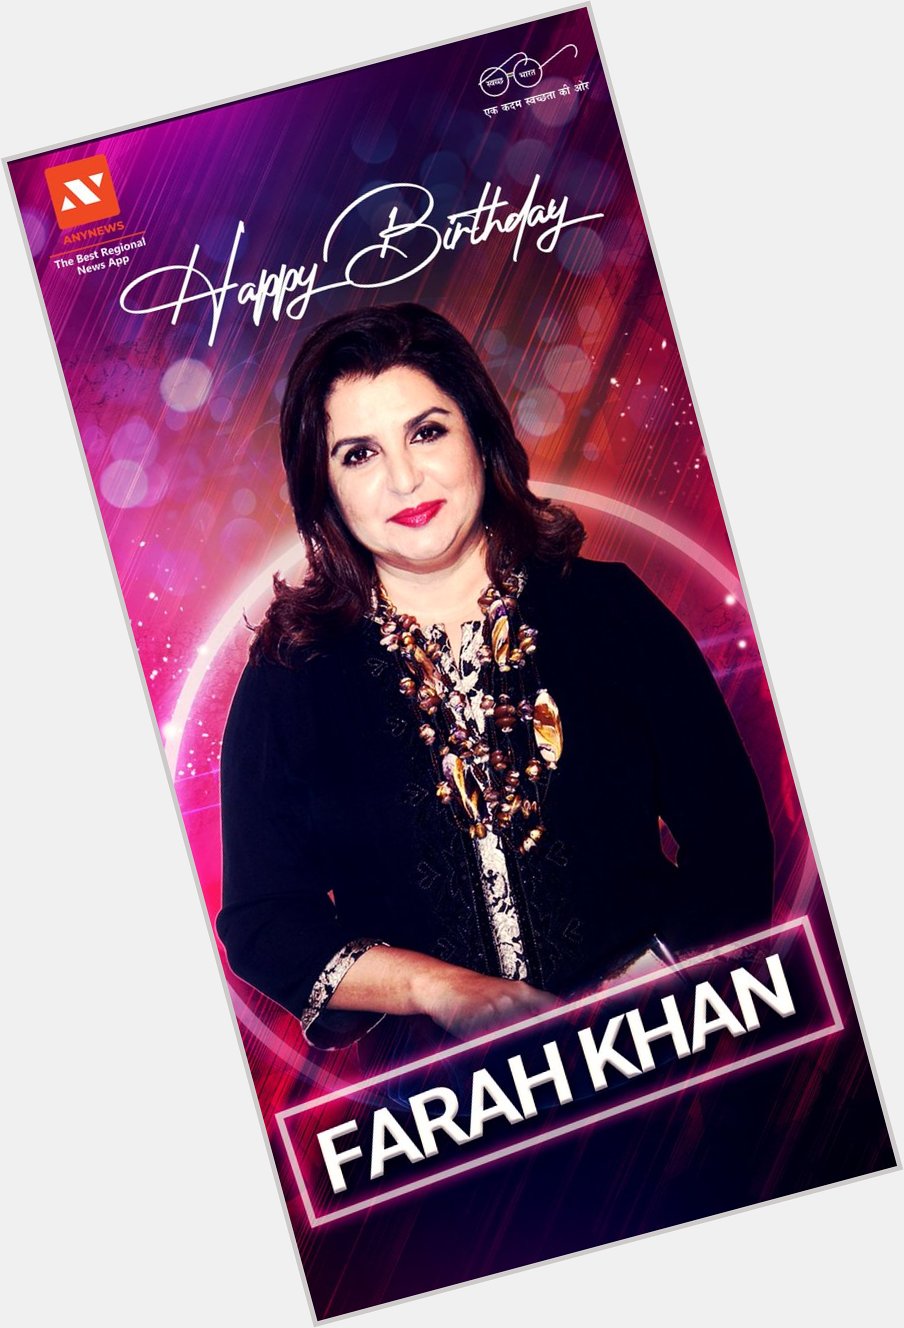 AnyNews wishes Farah khan Happy Birthday.     